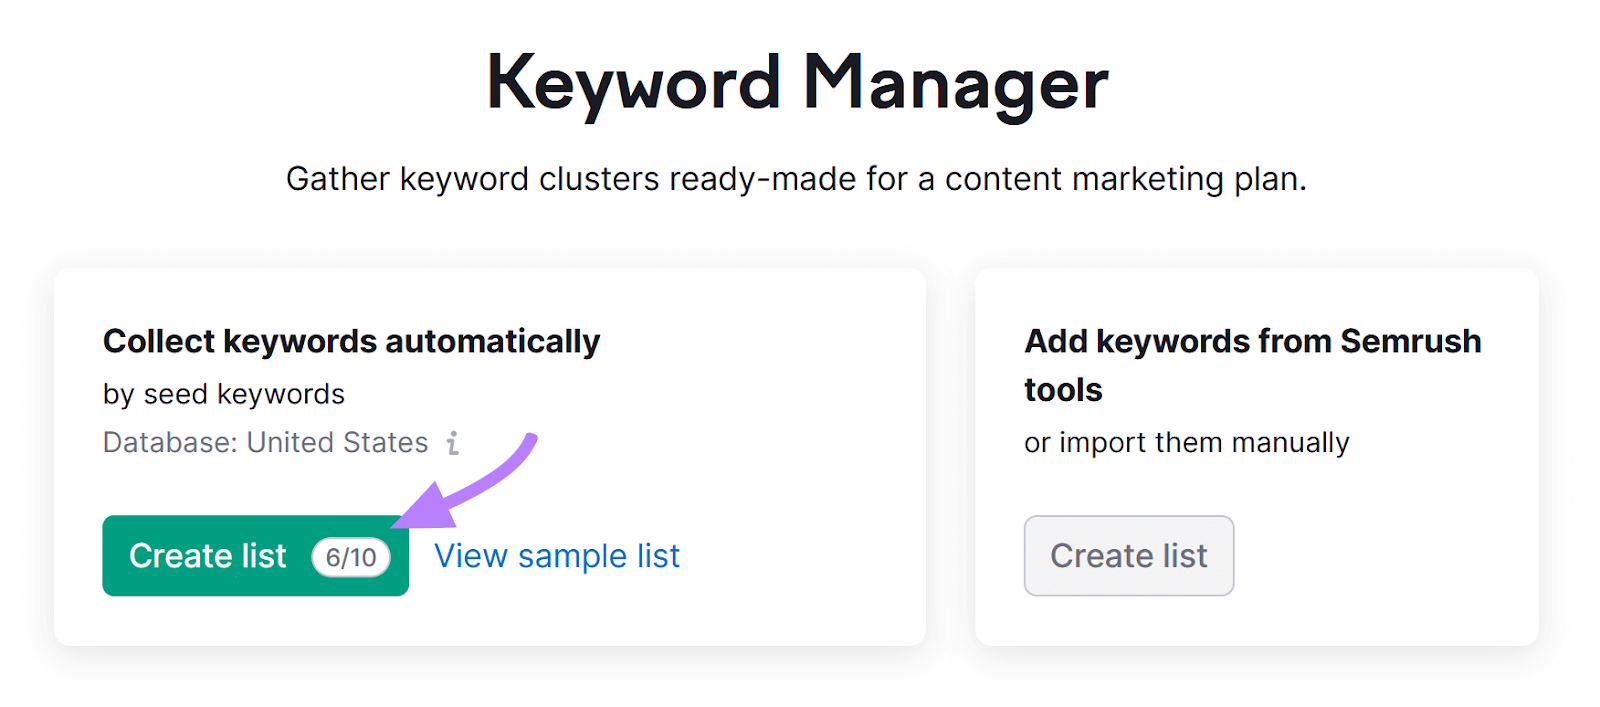 Keyword Manager tool